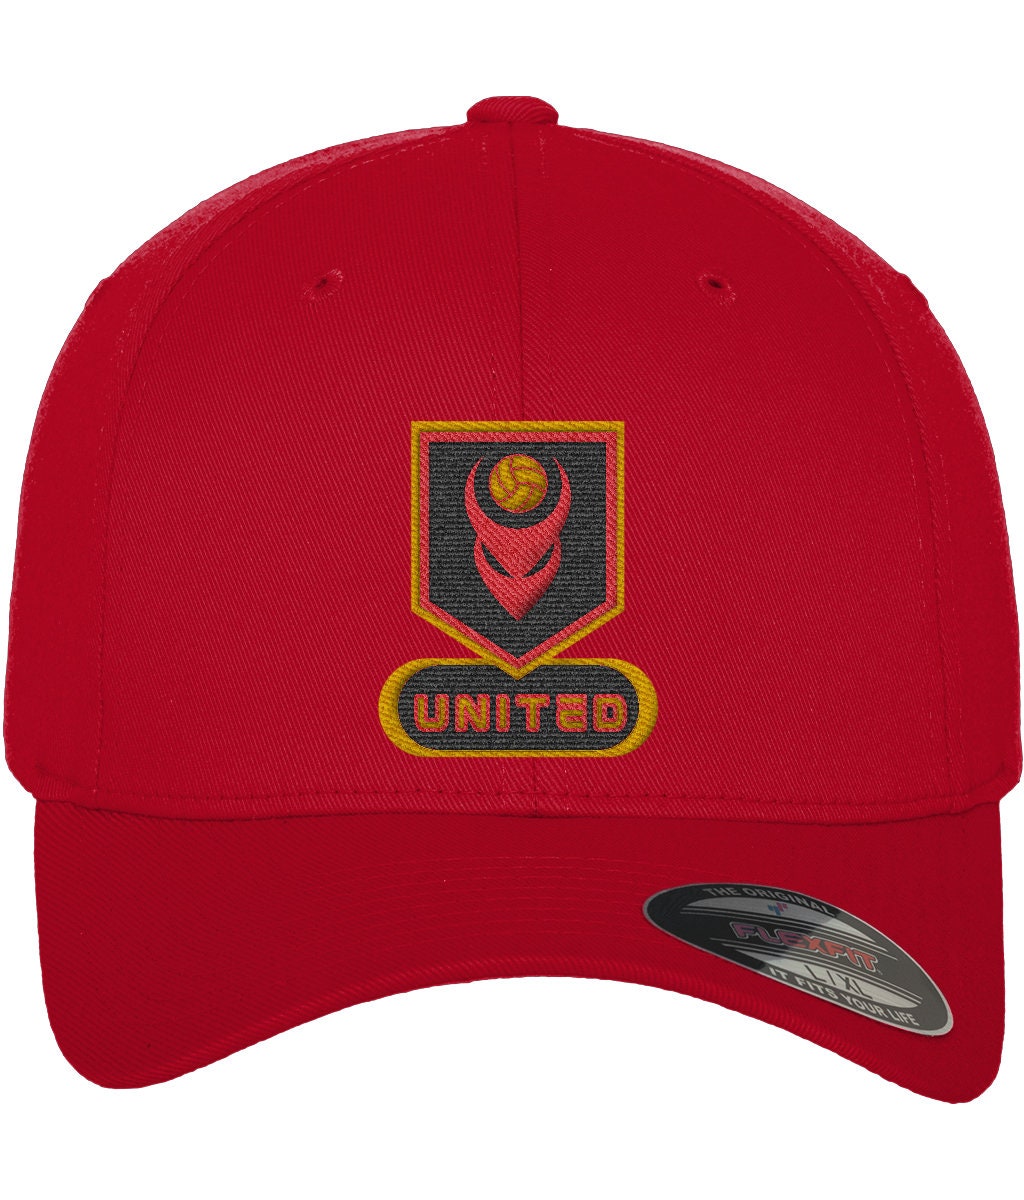 Devil Baseball - Flexfit United Cap Embroidered Football Etsy Team MUFC Hat Cap Red Emblem Manchester